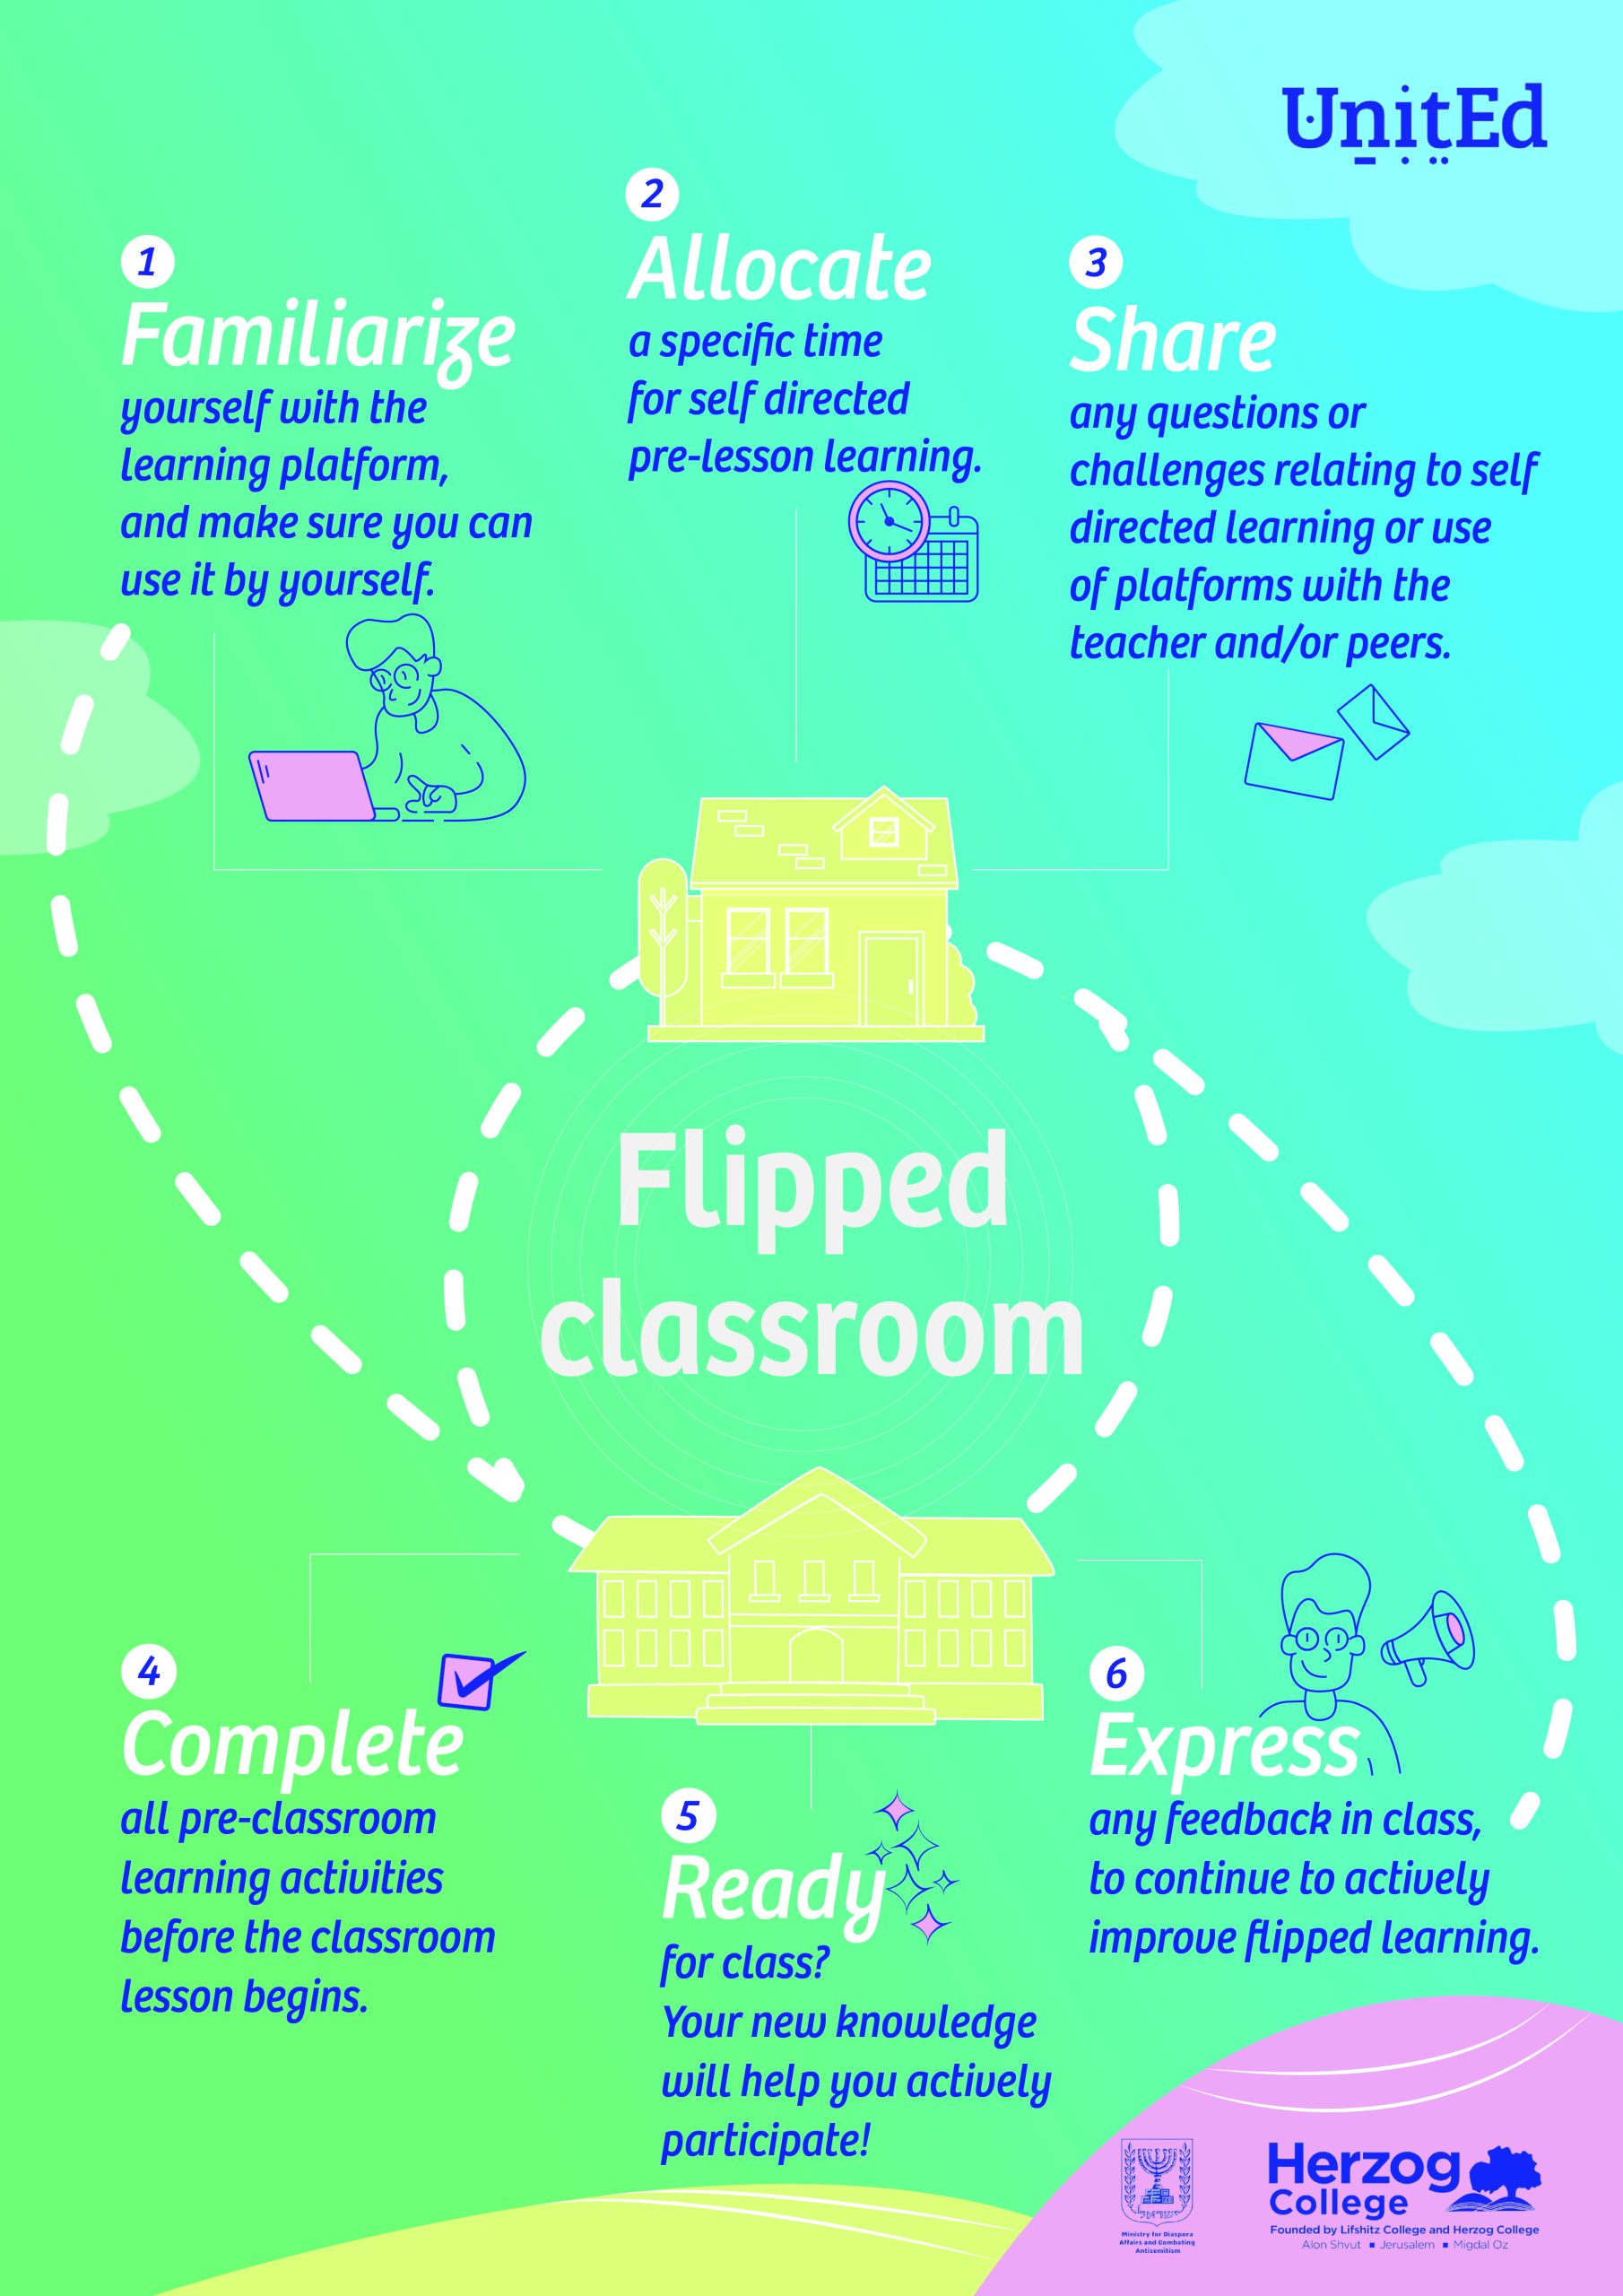 Flipped classroom